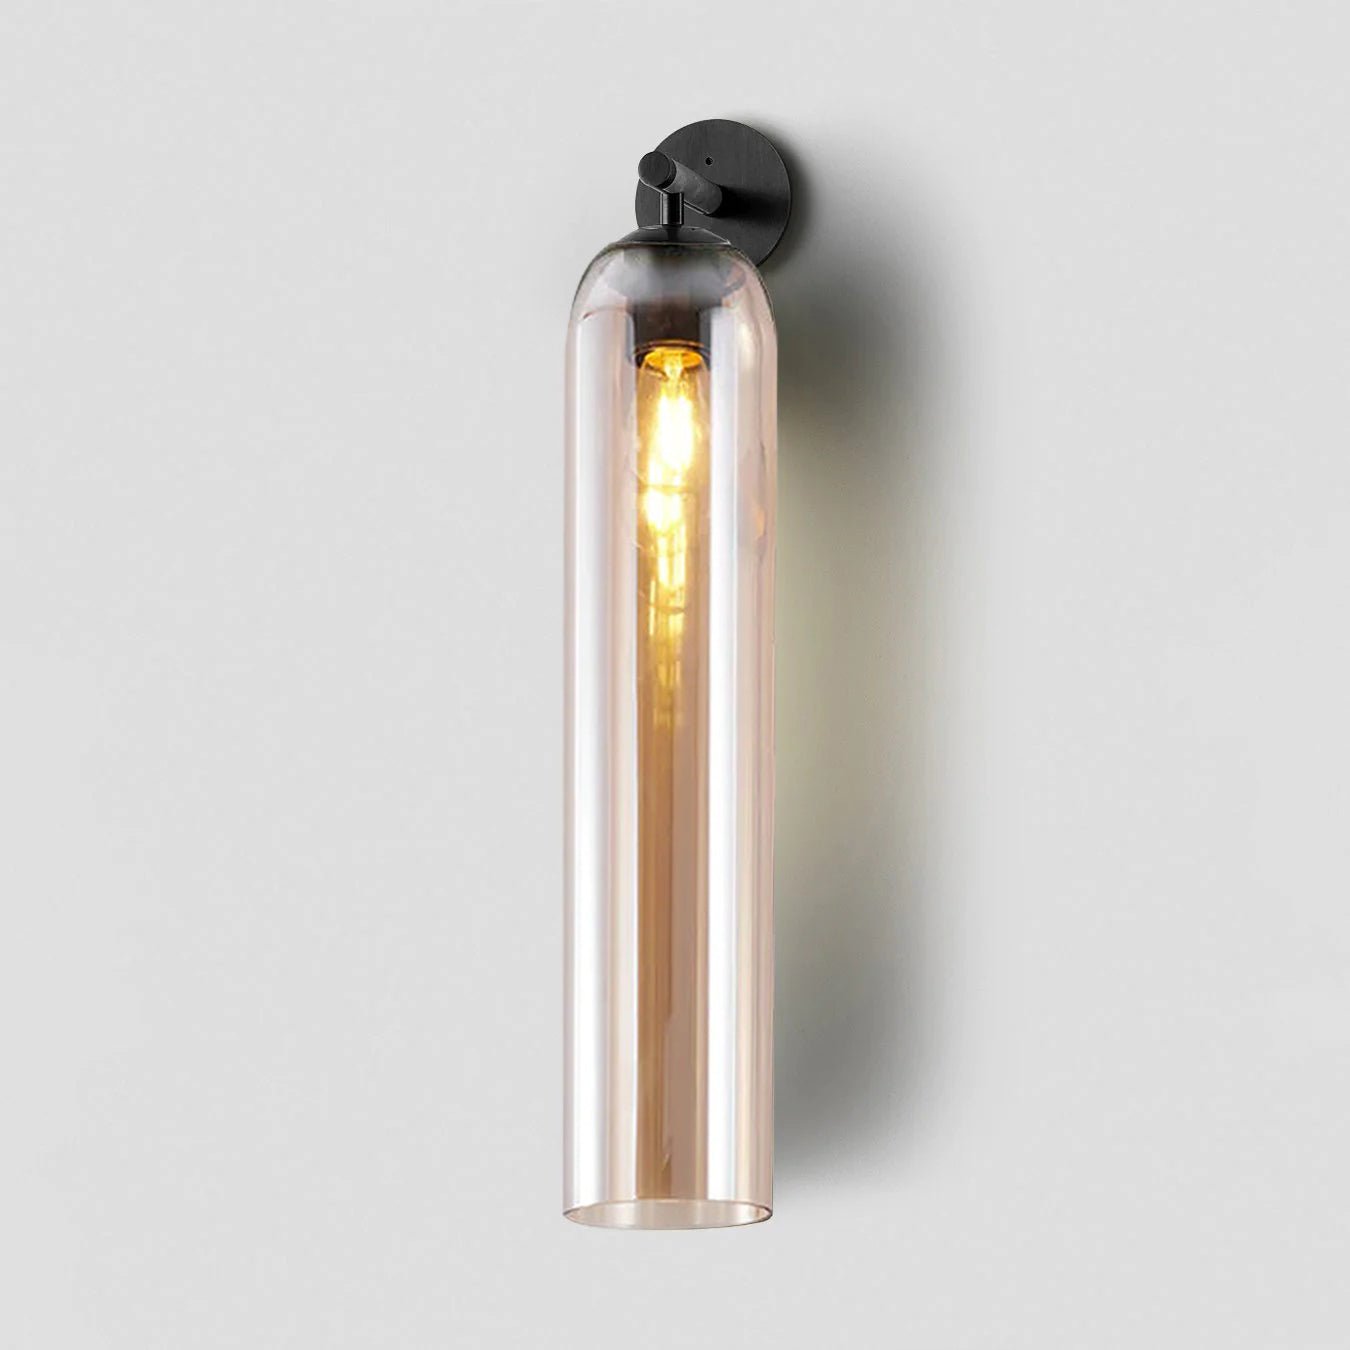 Black Amber Art Glass Sconce in 3.9" Diameter x 18.9" Height (10cm Diameter x 48cm Height)